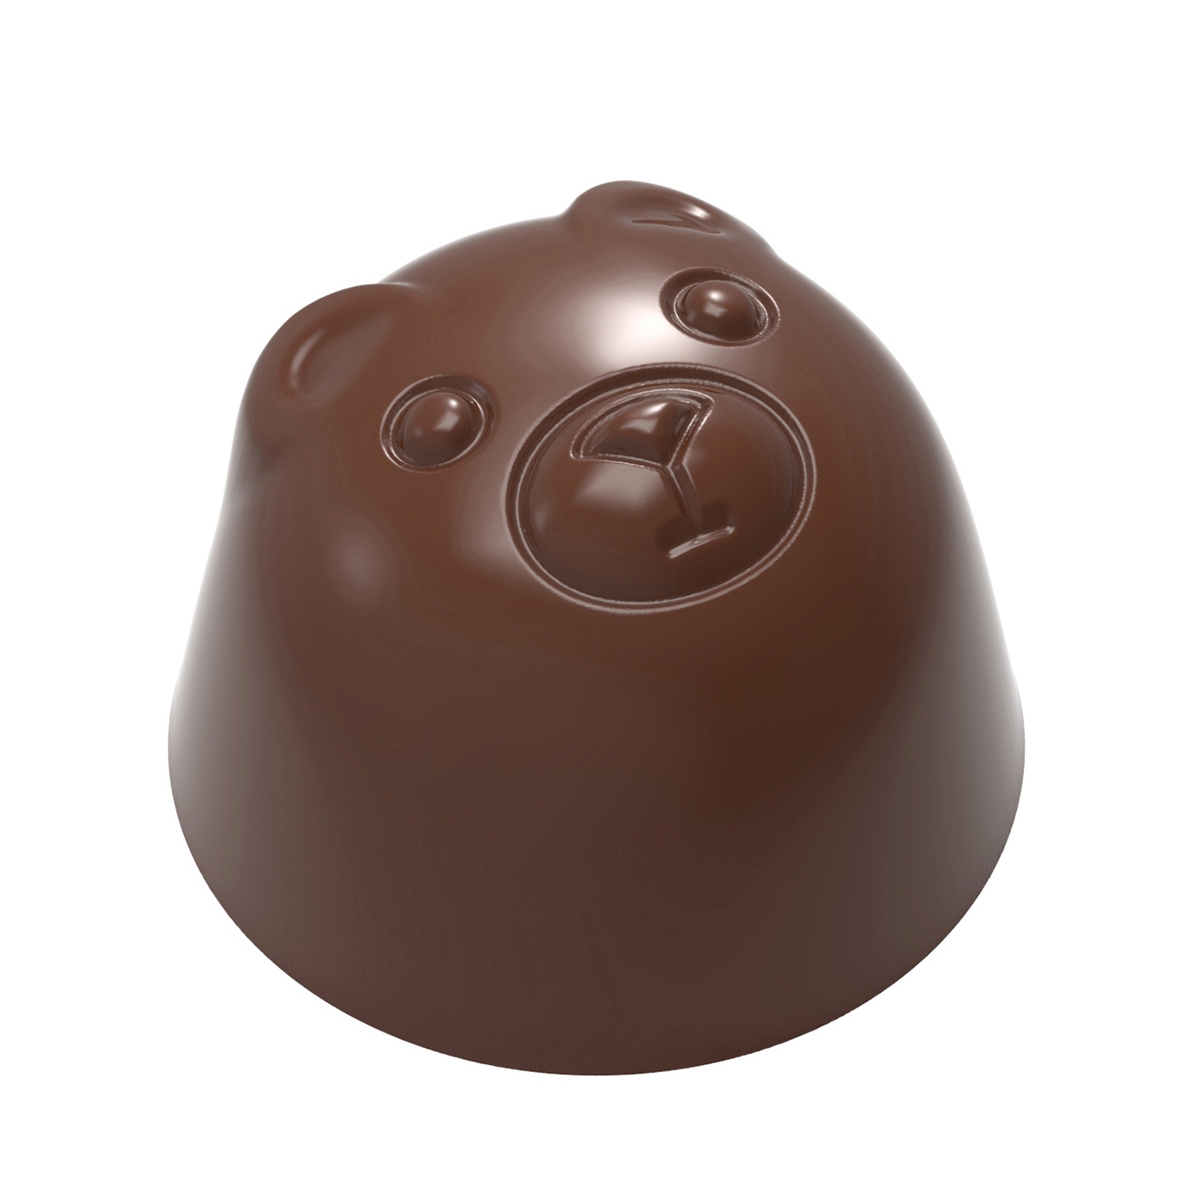 Форма для шоколада «Медвежонок Бон» (Bear praline) CW12118 поликарбонатная, 21 ячейка, Chocolate World, Бельгия  | Фото — Магазин Andy Chef  1